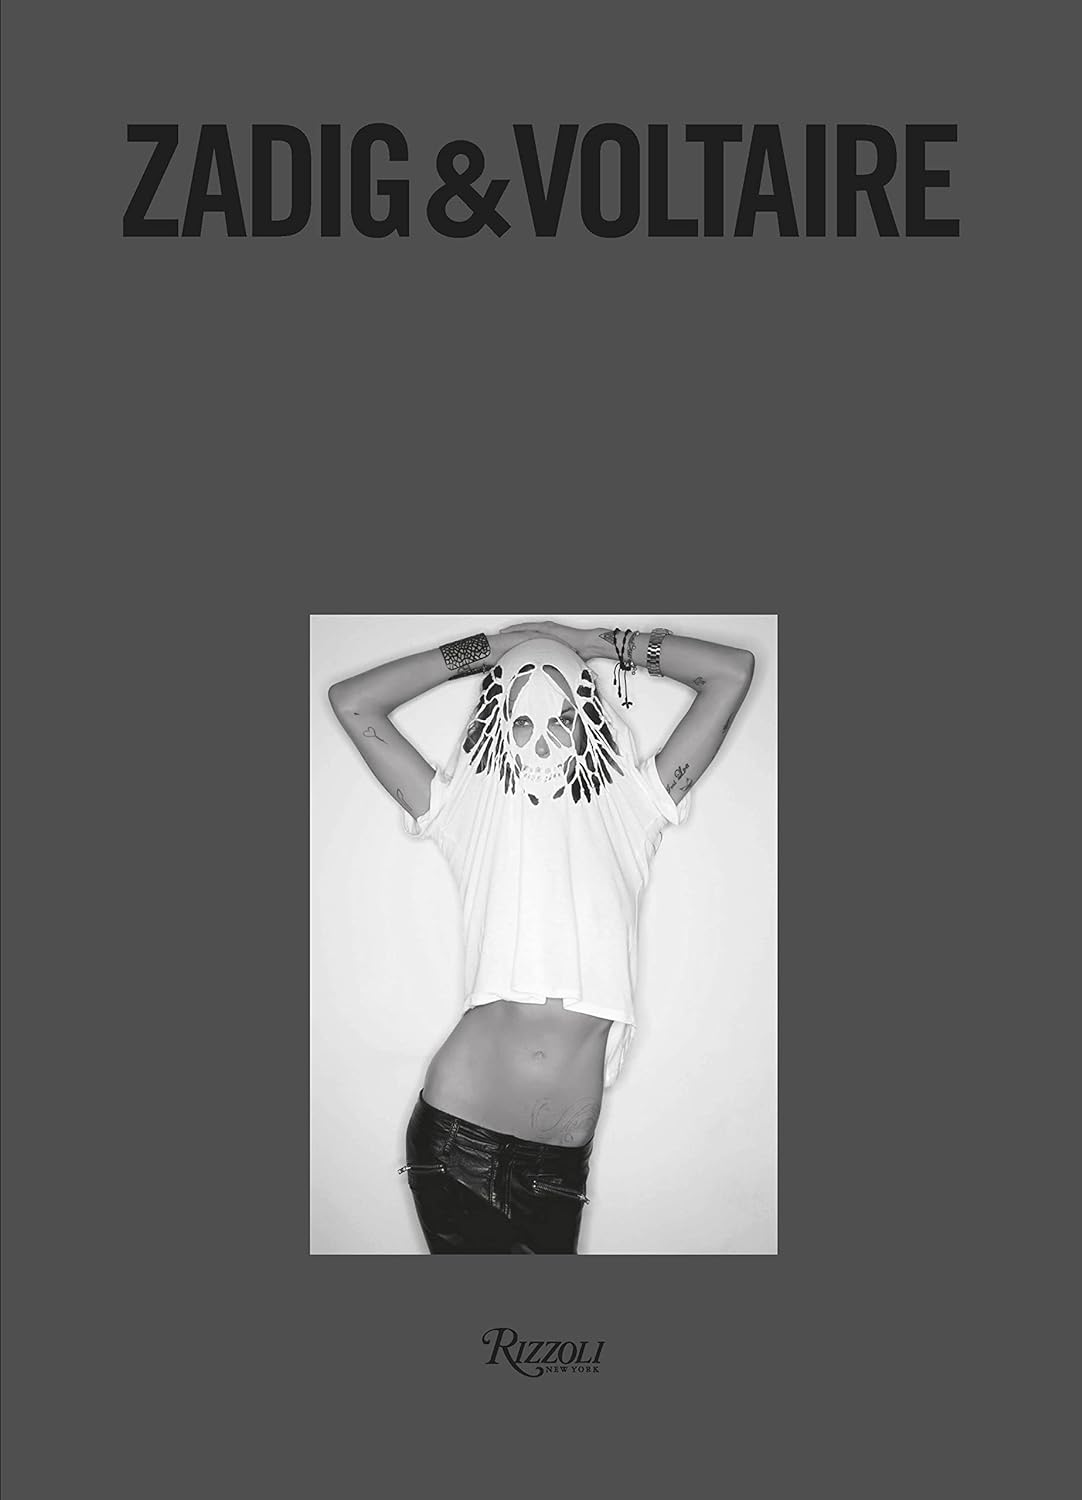 Zadig & Voltaire - Established 1997 in Paris